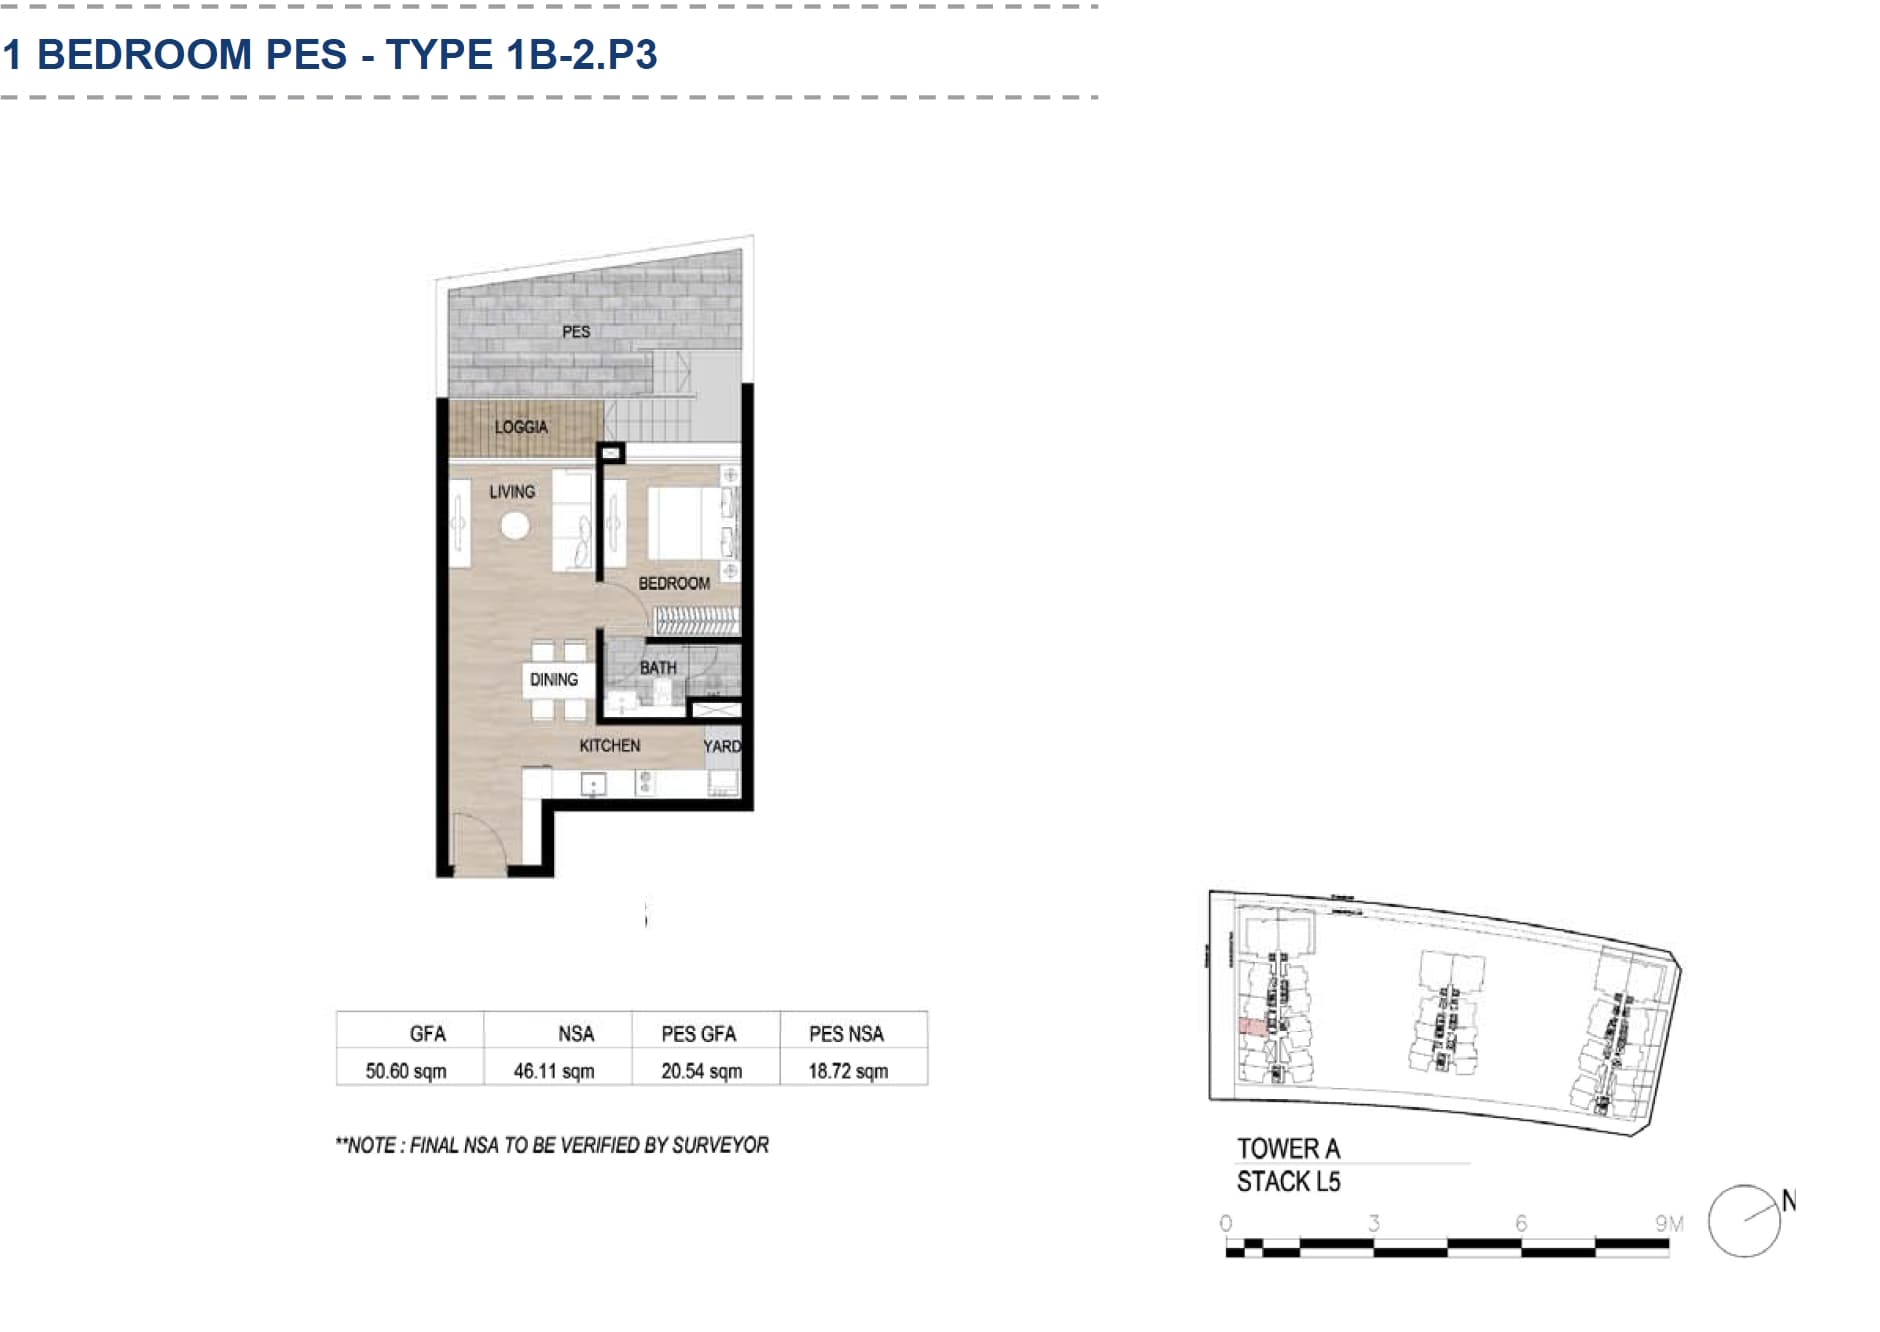 Floor plan of Metropole Thu Thiem garden apartment 4